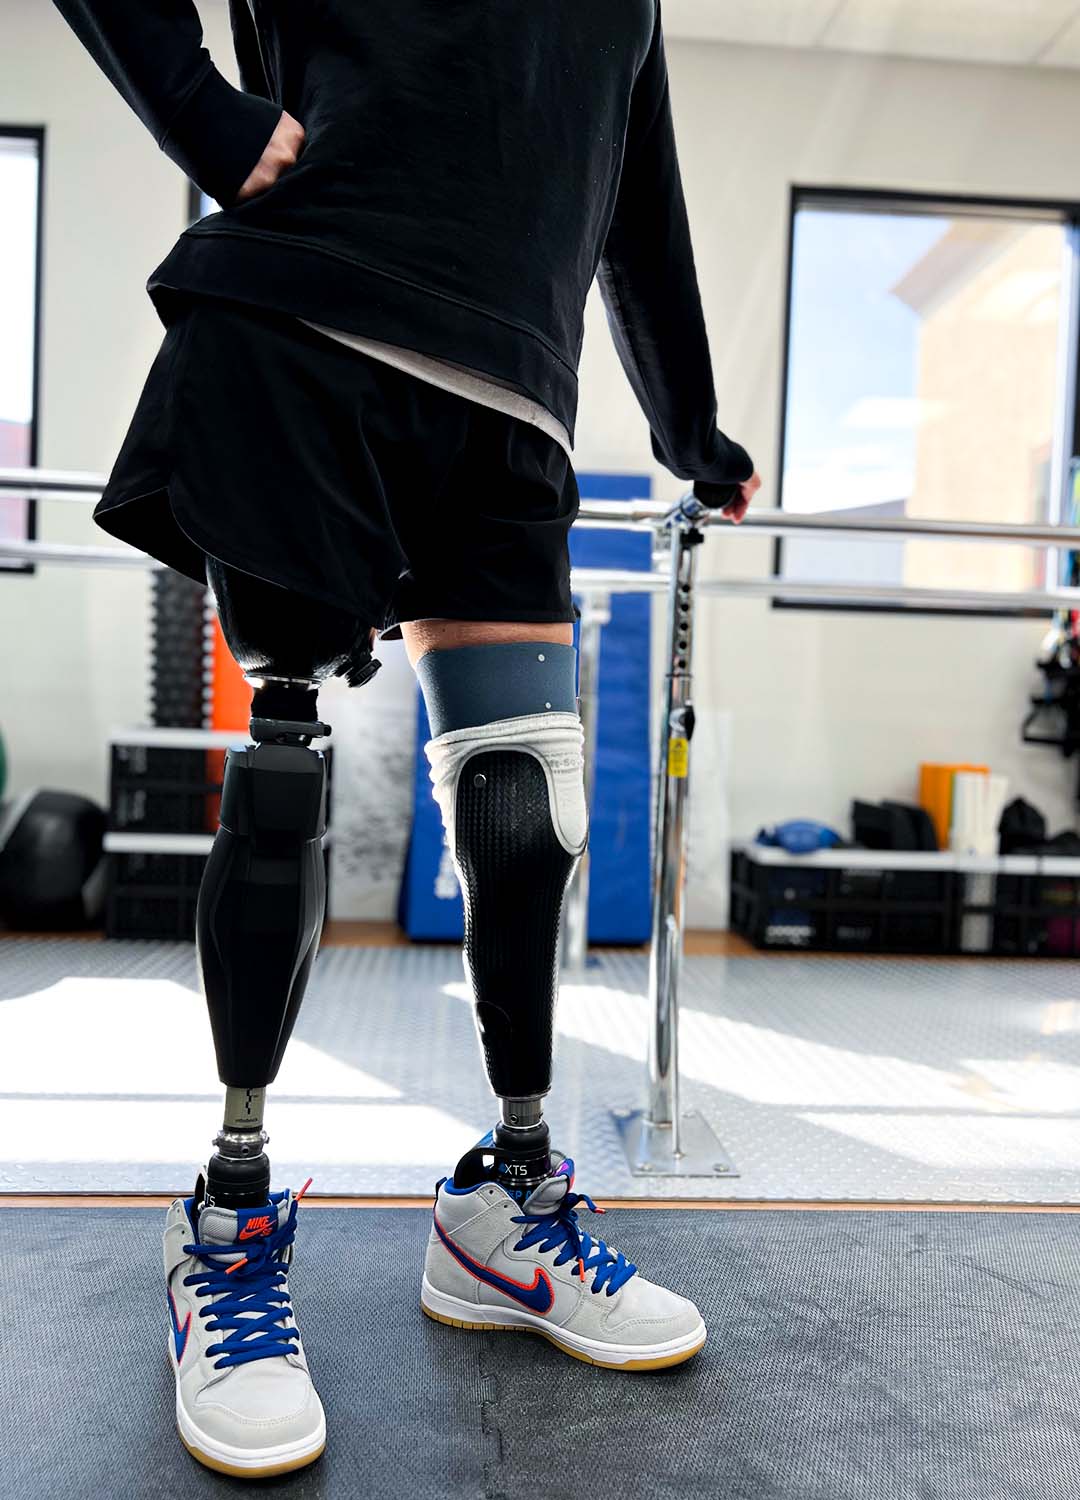 Above knee & Below Knee Amputee prosthetic training / Rehab